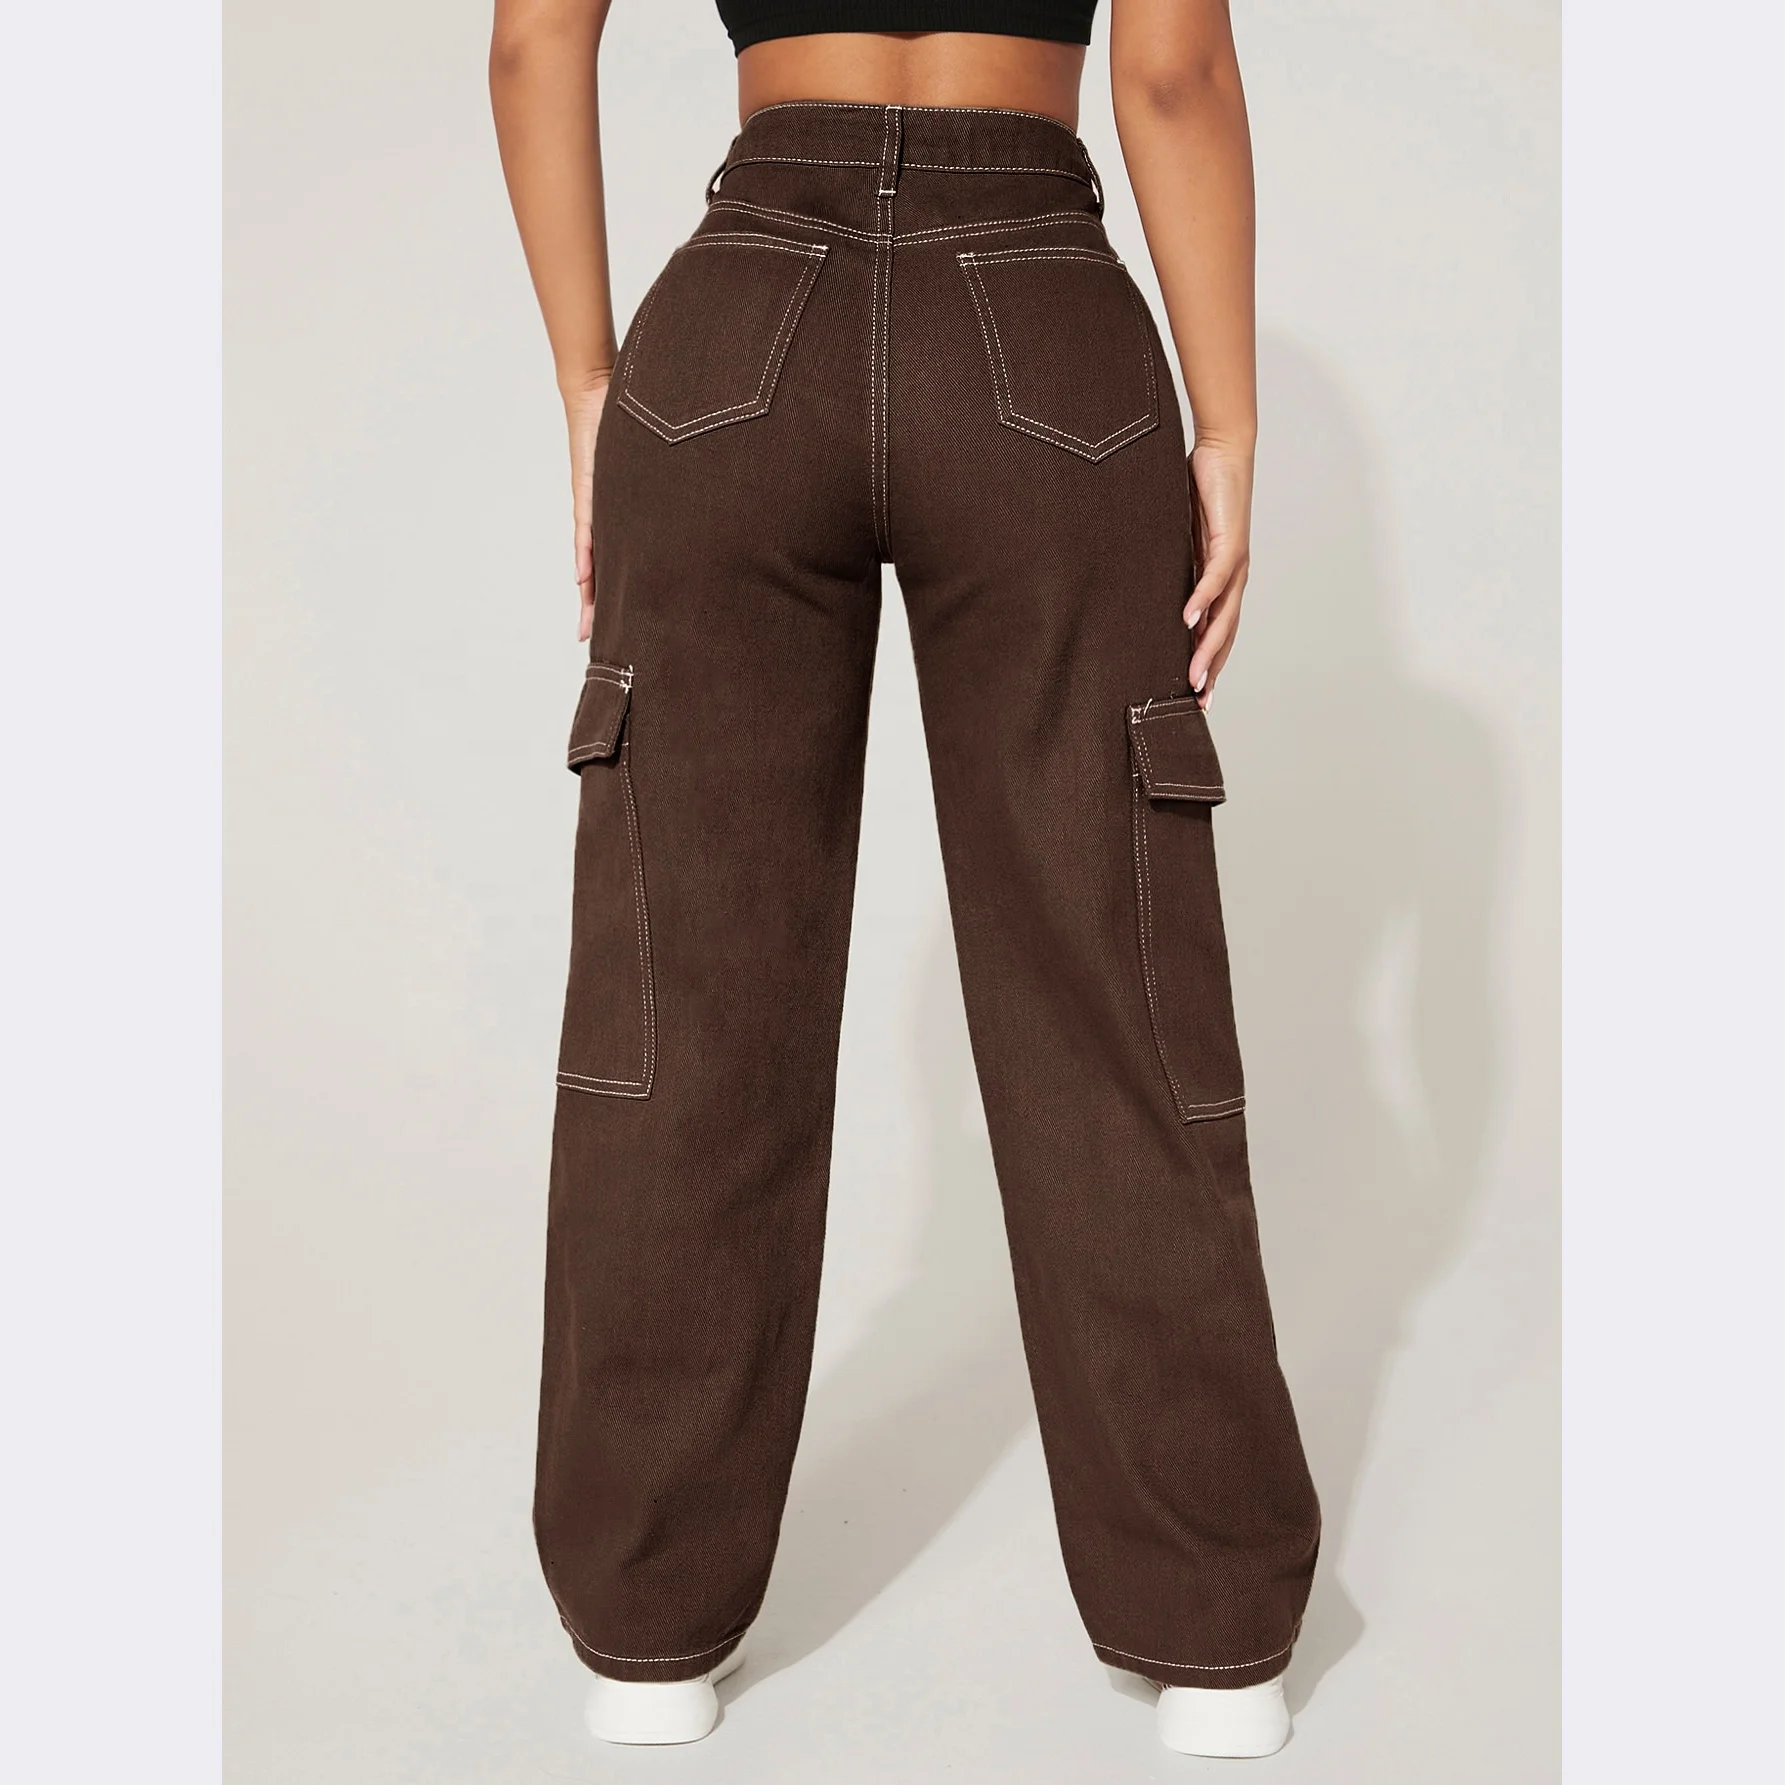 Vintage Cargo Pants High Waist Pocket Button Design Cargo Pants Women  Fashion Streetwear Pockets Straight Trousers Overa size XL Color A